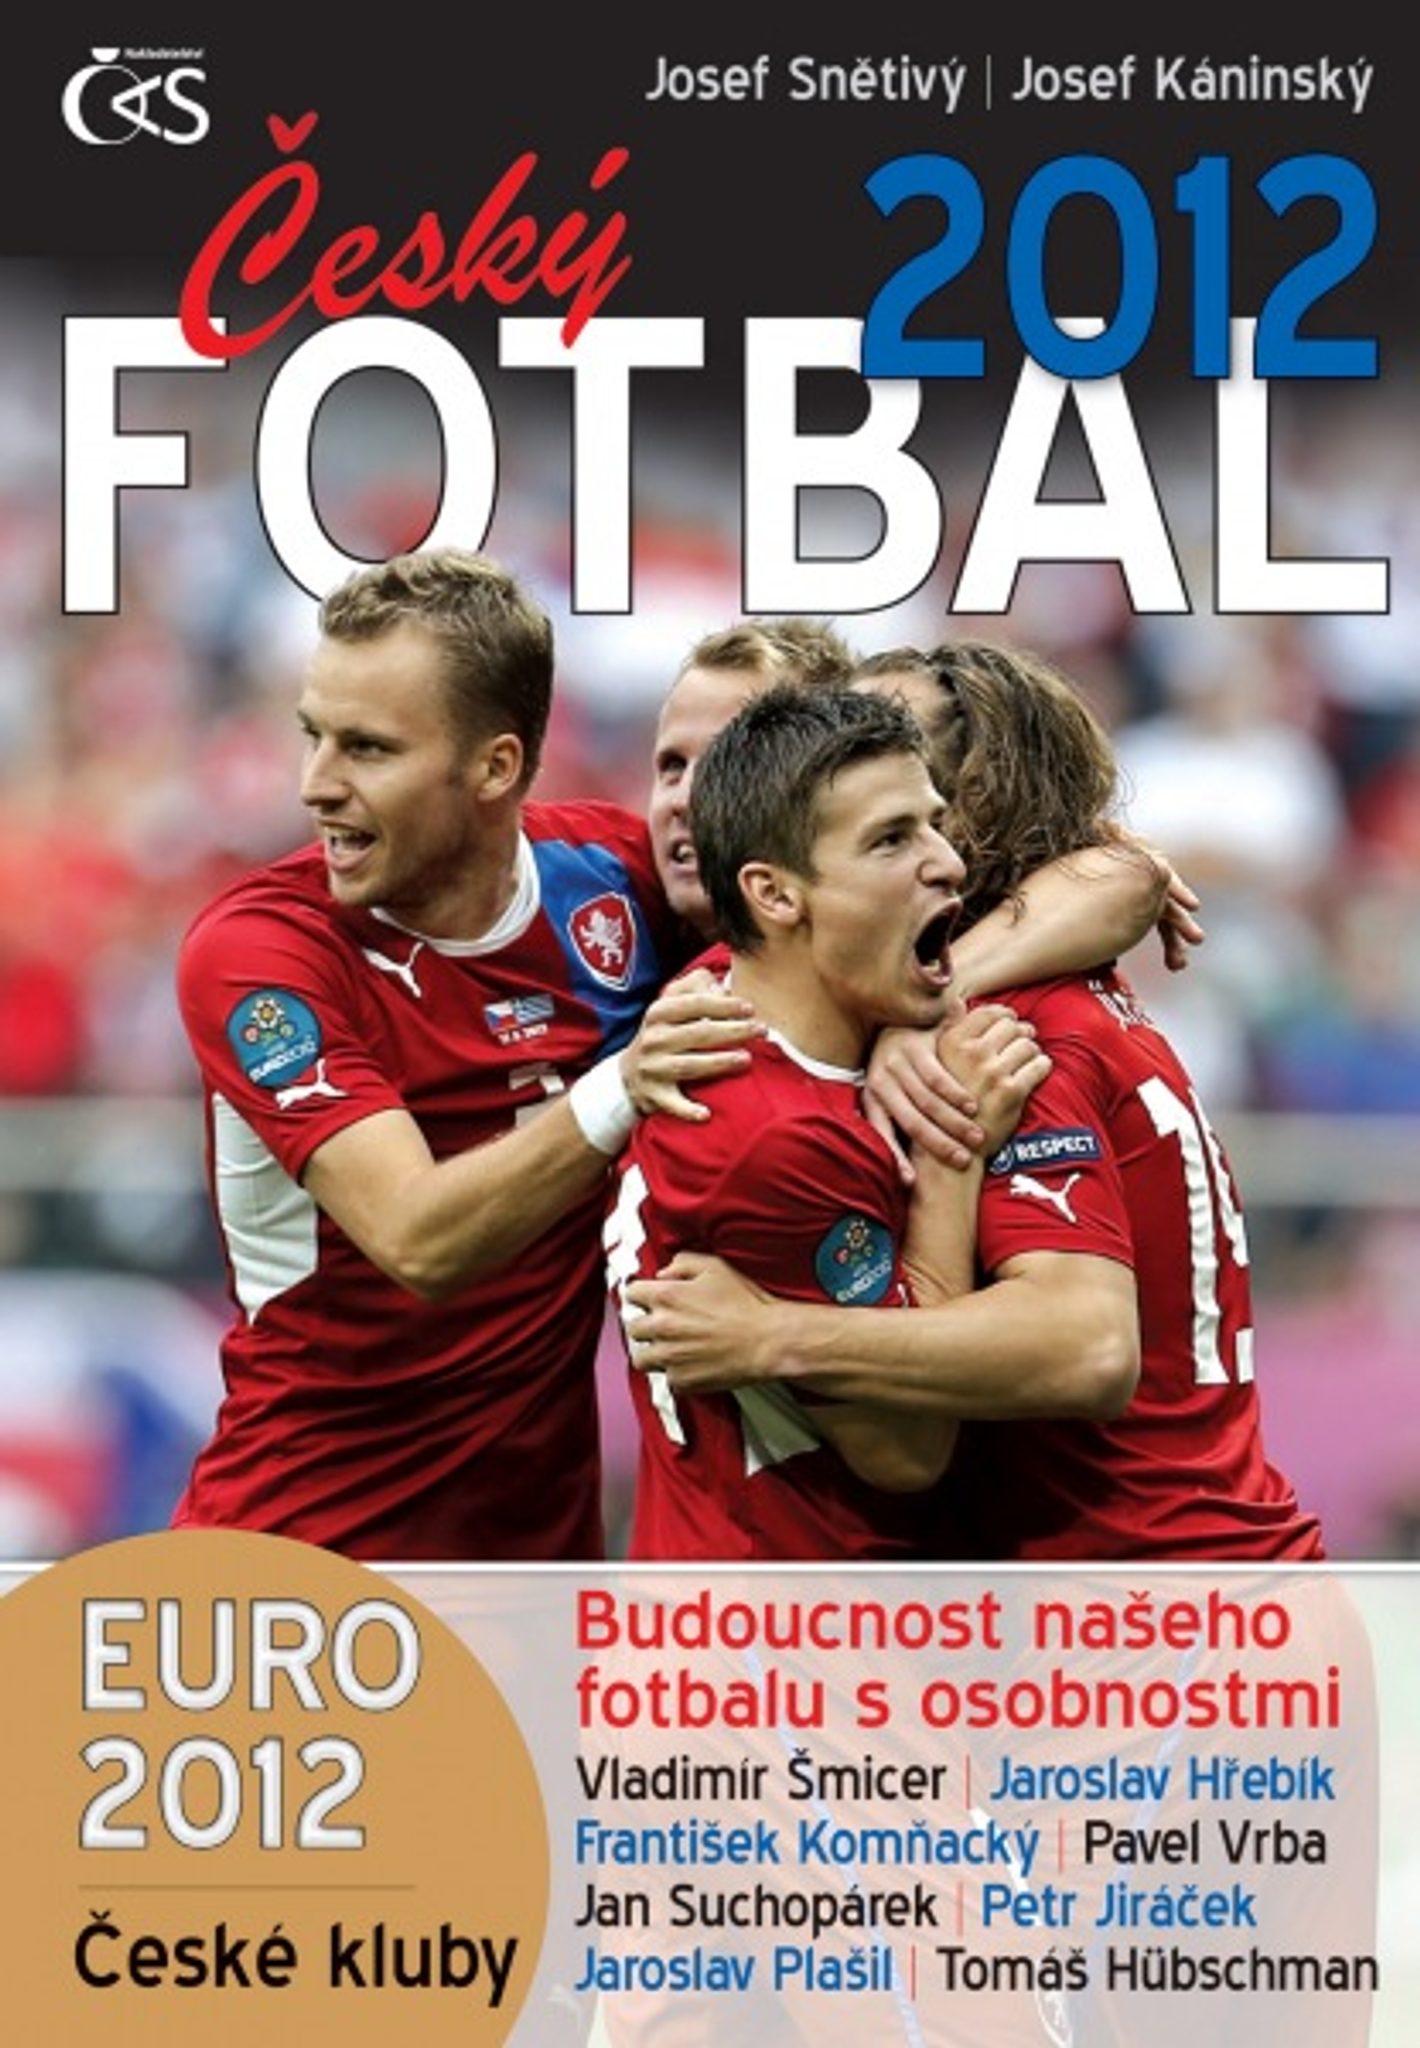 esk fotbal 2012 - Euro 2012, esk kluby a budoucnost naeho fotbalu s osobnostmi - Kliknutm na obrzek zavete